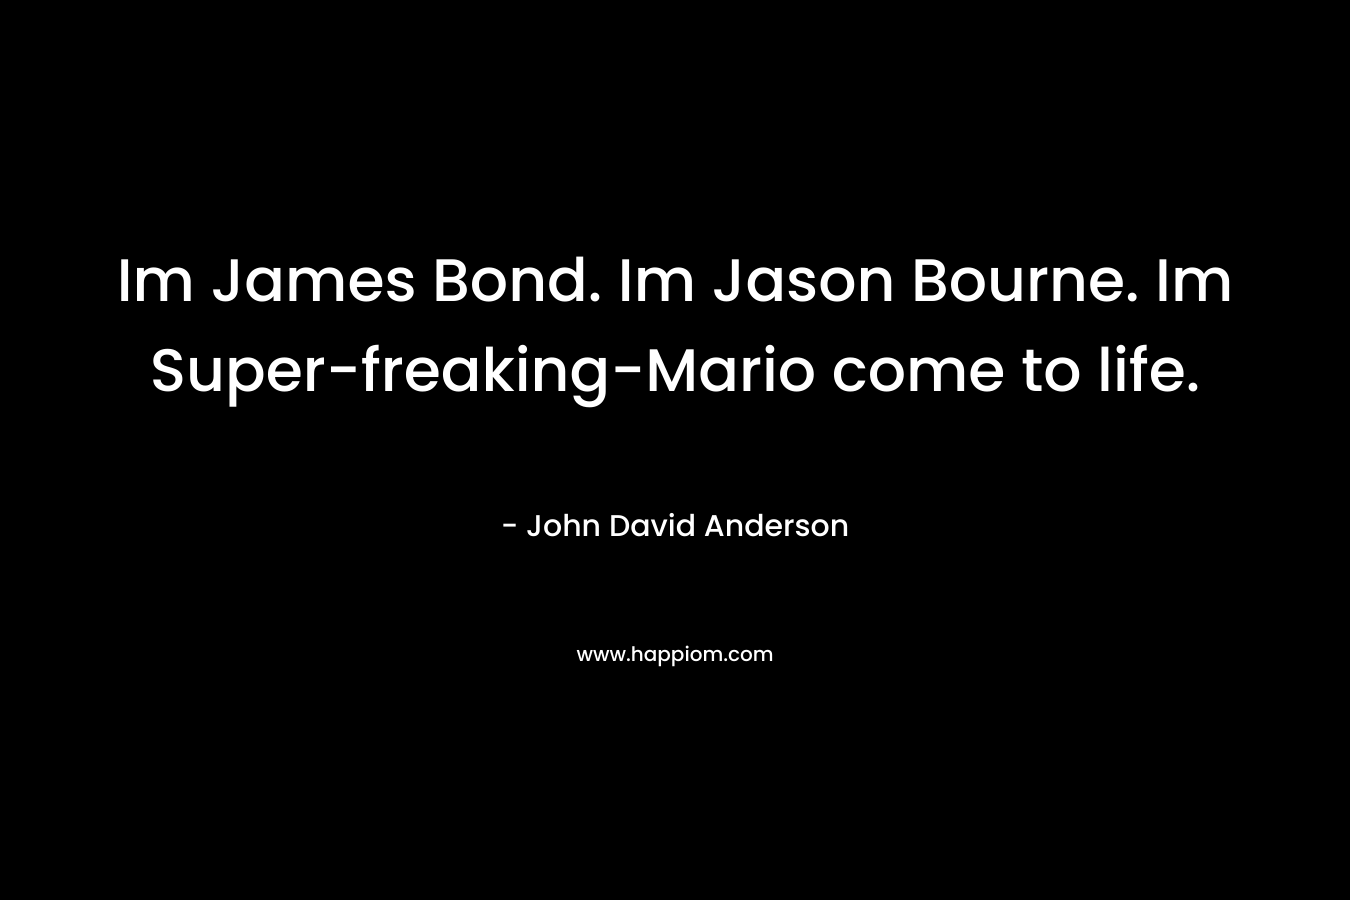 Im James Bond. Im Jason Bourne. Im Super-freaking-Mario come to life.